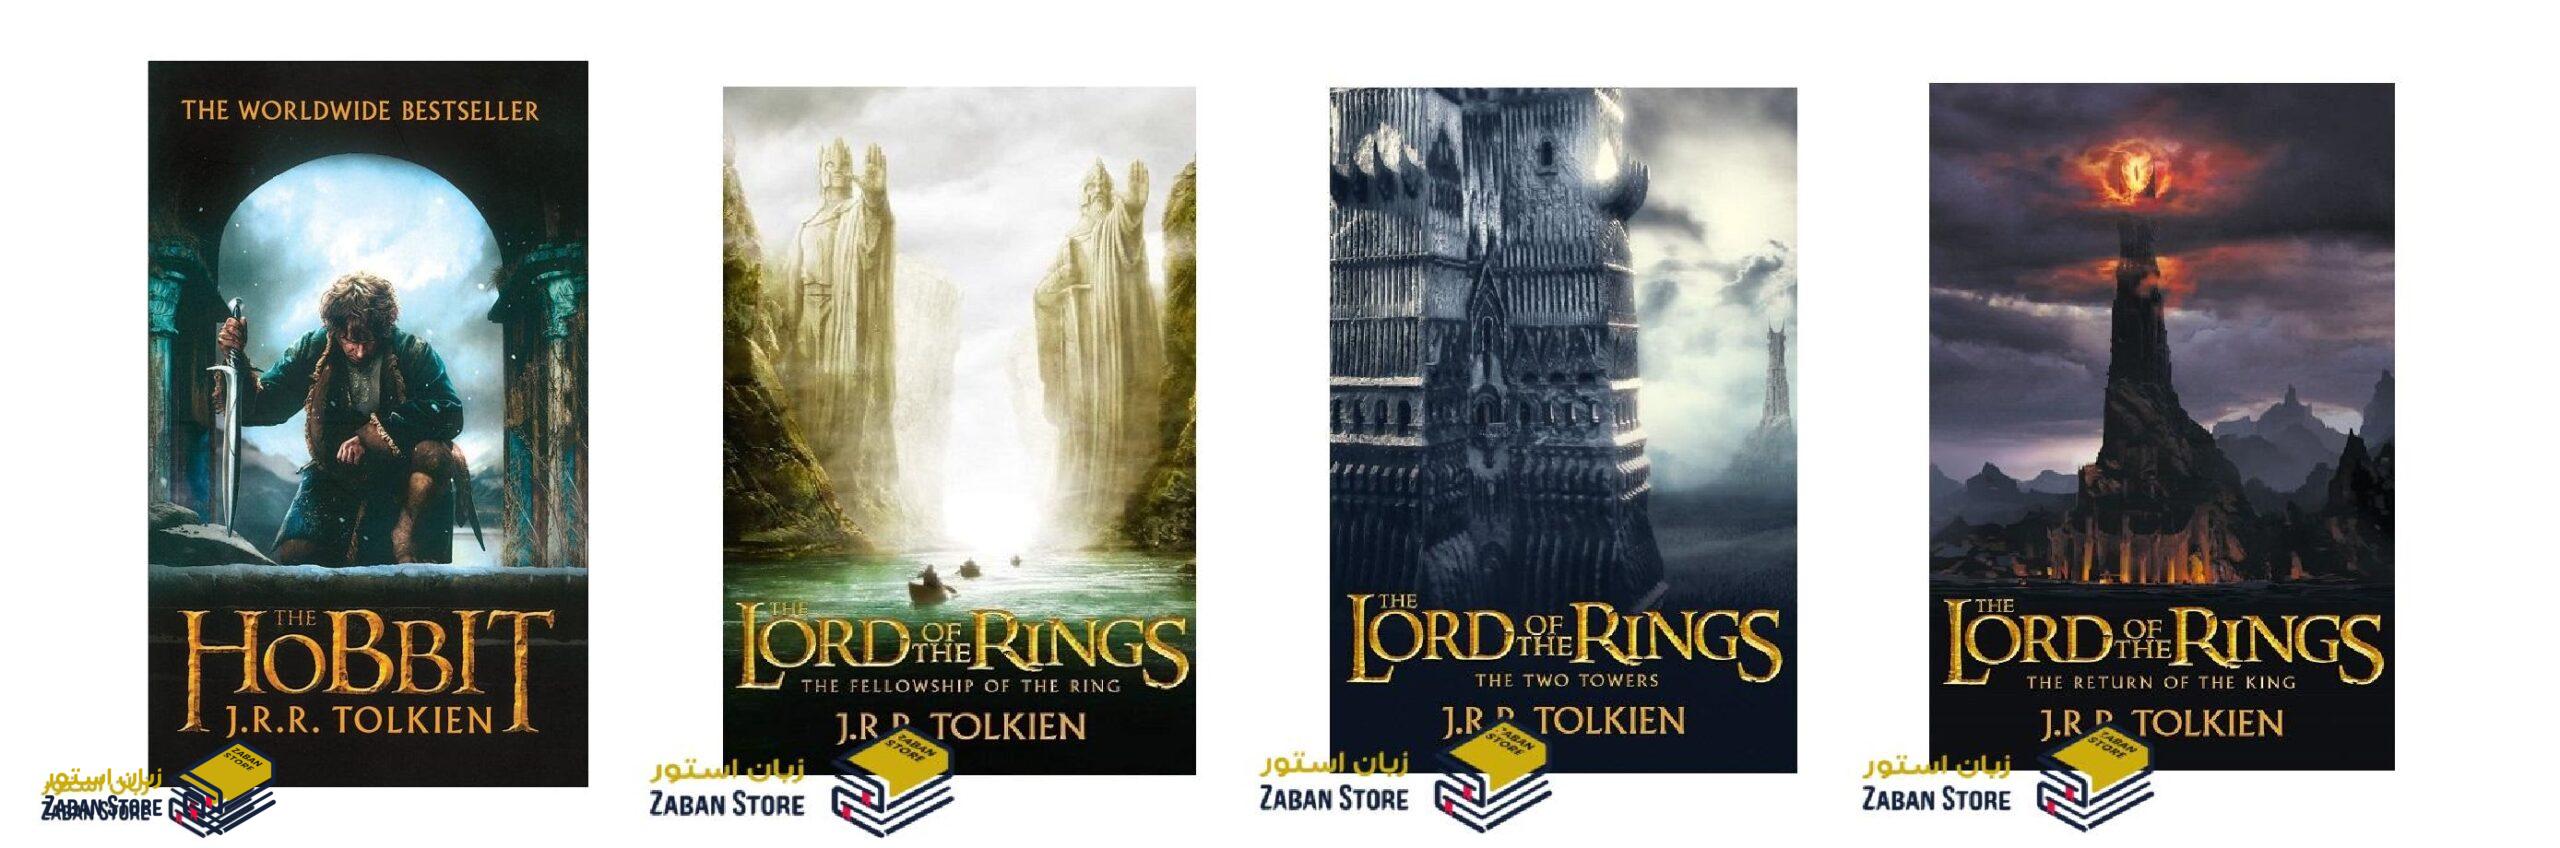 خرید کتاب رمان انگلیسی | The Hobbit | کتاب رمان انگلیسی The Lord of the Rings اثر J.R.R.TOLKIEN